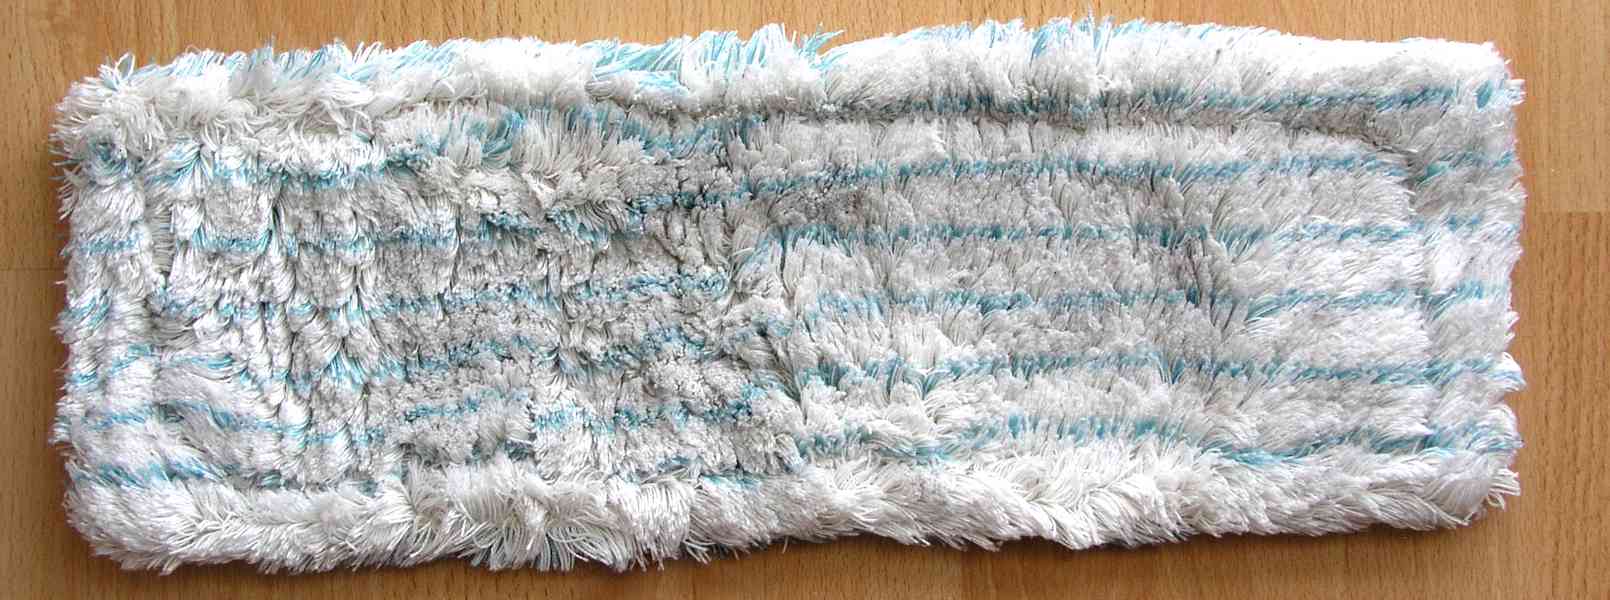  Návlek cotton plus  na mop Leifheit Combi 41 cm - foto 1